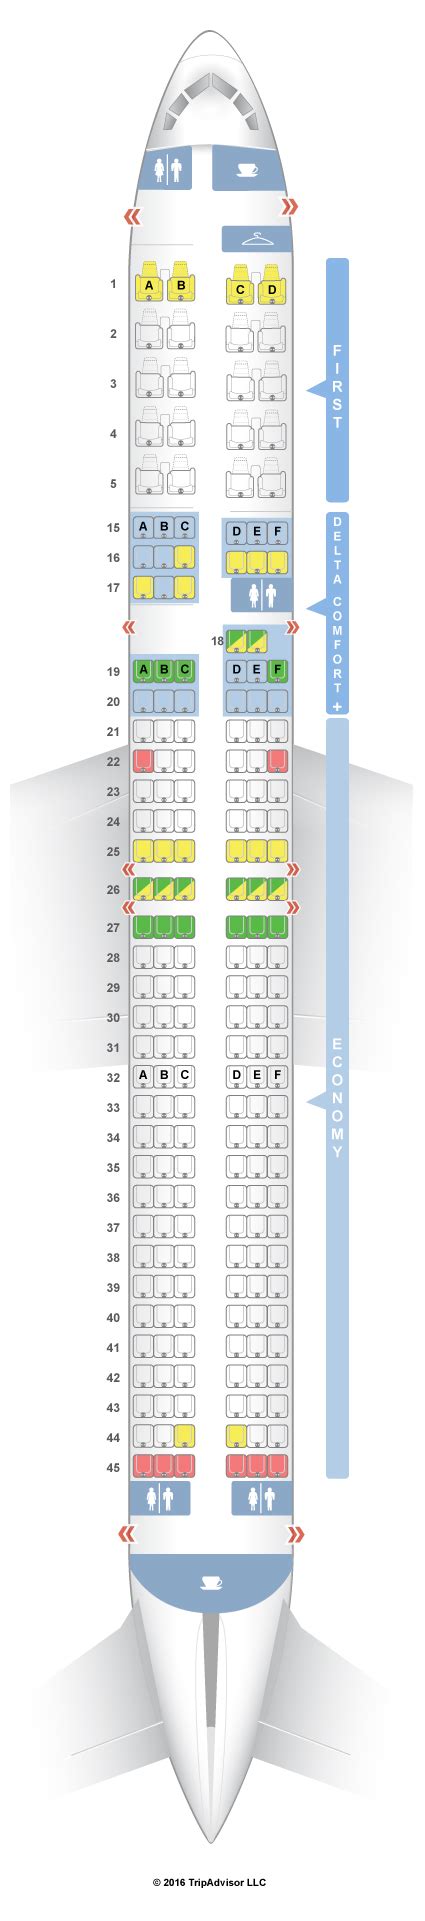 delta 757-200 seat map